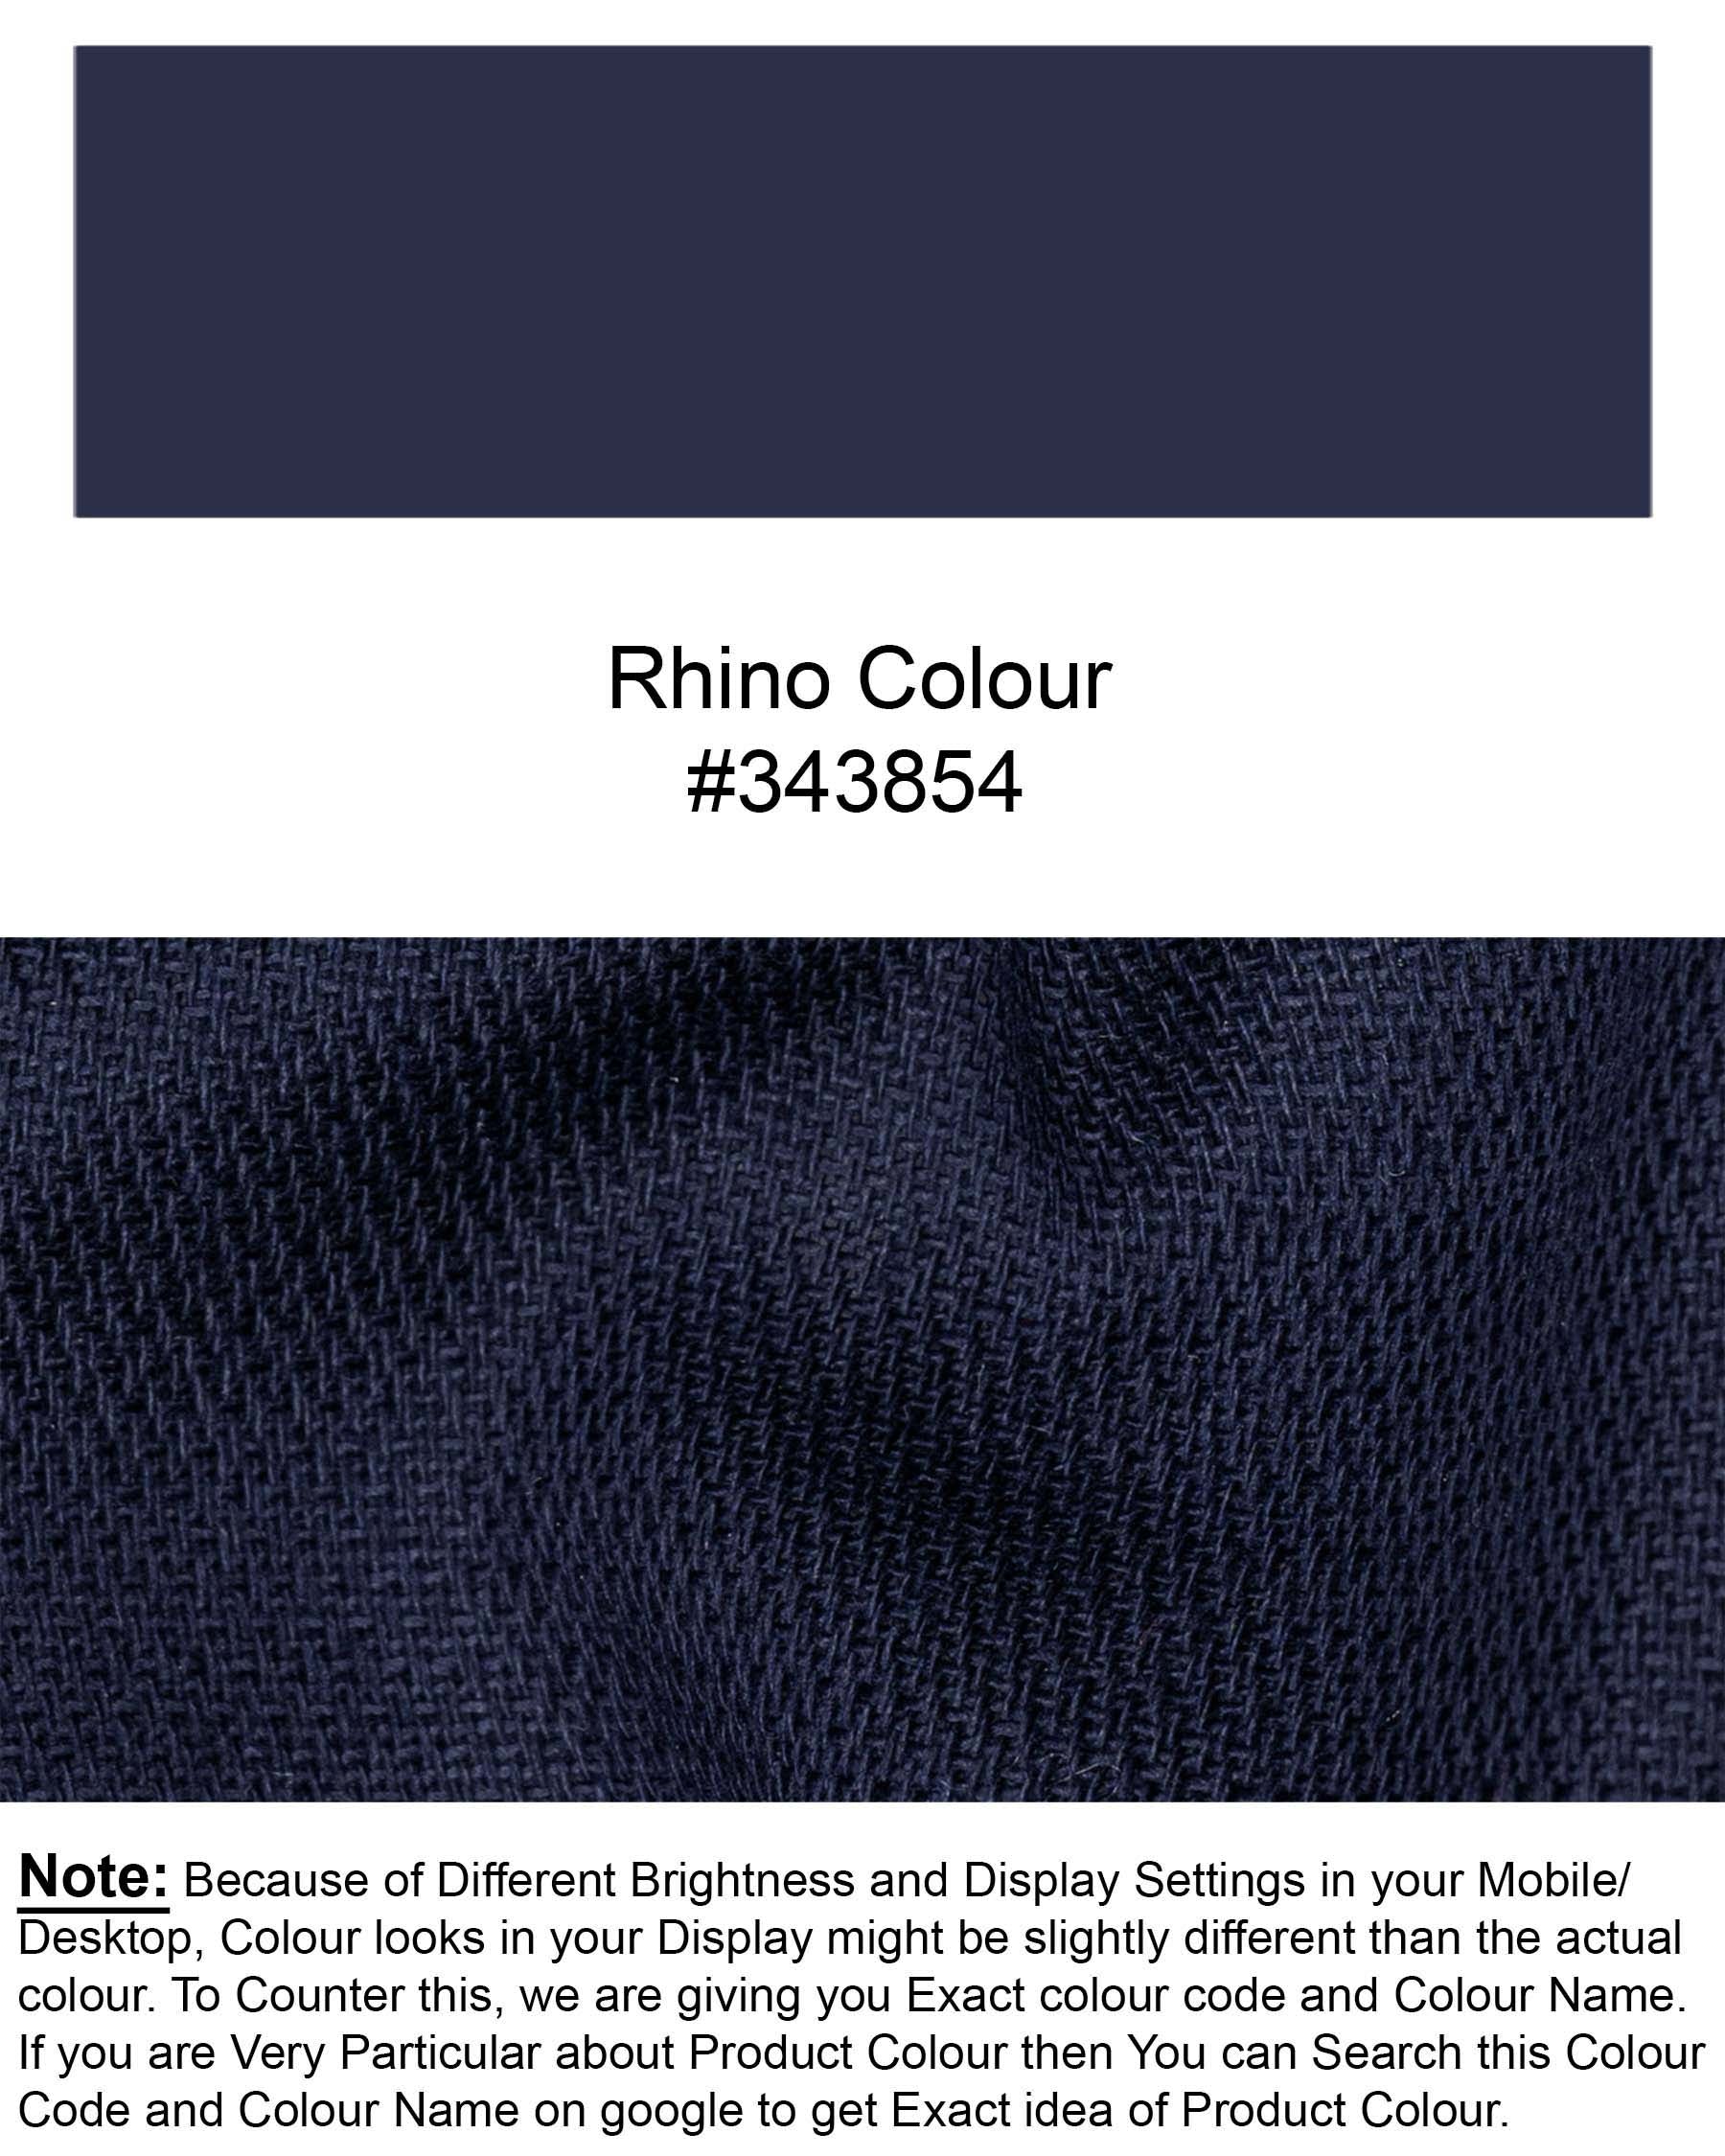 Rhino Blue Dobby Textured Premium Giza Cotton Shirt 6980-BD-38,6980-BD-38,6980-BD-39,6980-BD-39,6980-BD-40,6980-BD-40,6980-BD-42,6980-BD-42,6980-BD-44,6980-BD-44,6980-BD-46,6980-BD-46,6980-BD-48,6980-BD-48,6980-BD-50,6980-BD-50,6980-BD-52,6980-BD-52